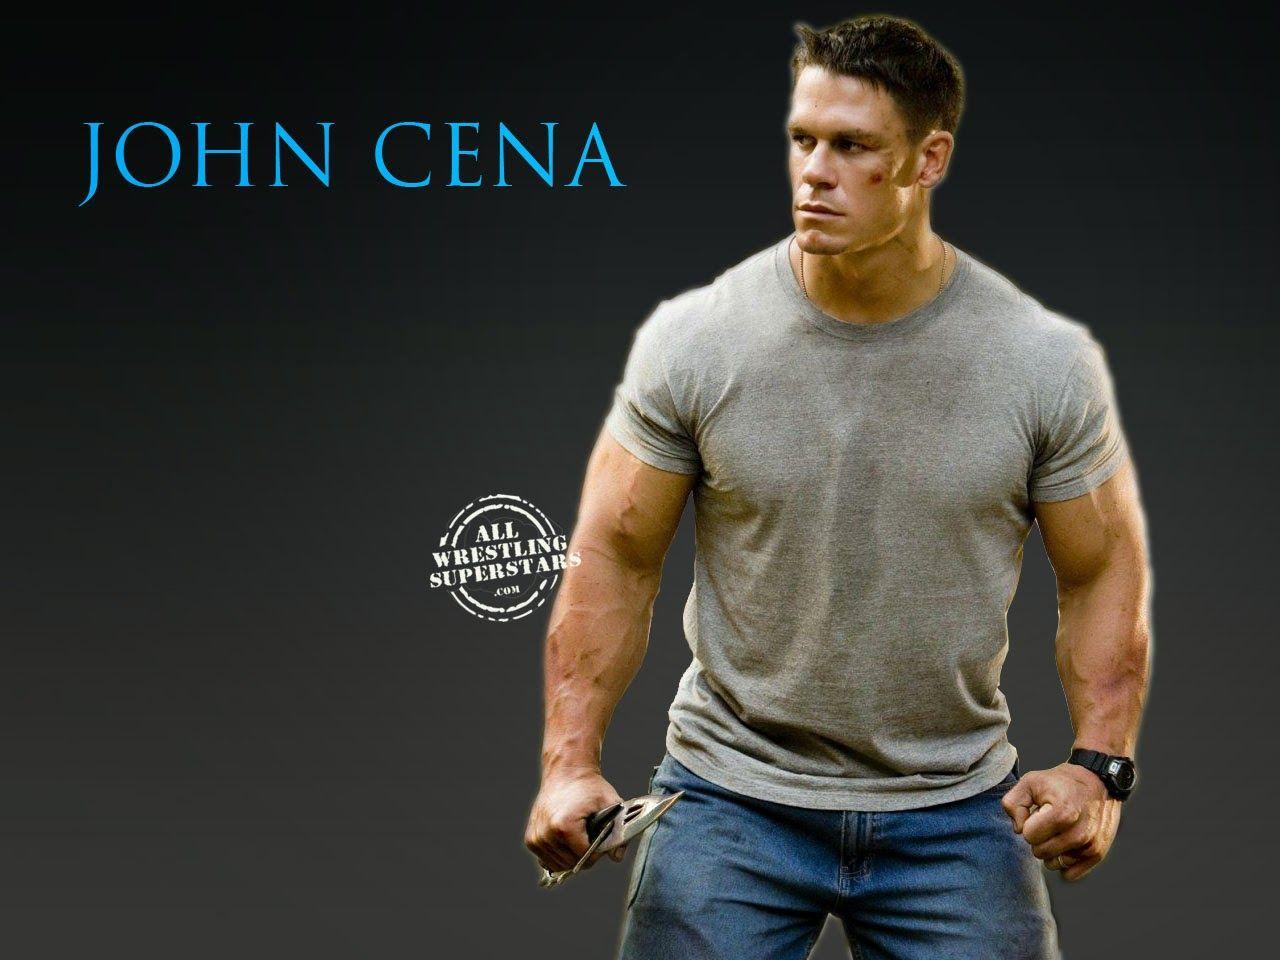 John Cena Wallpaper. Beautiful John Cena Picture. Superstar